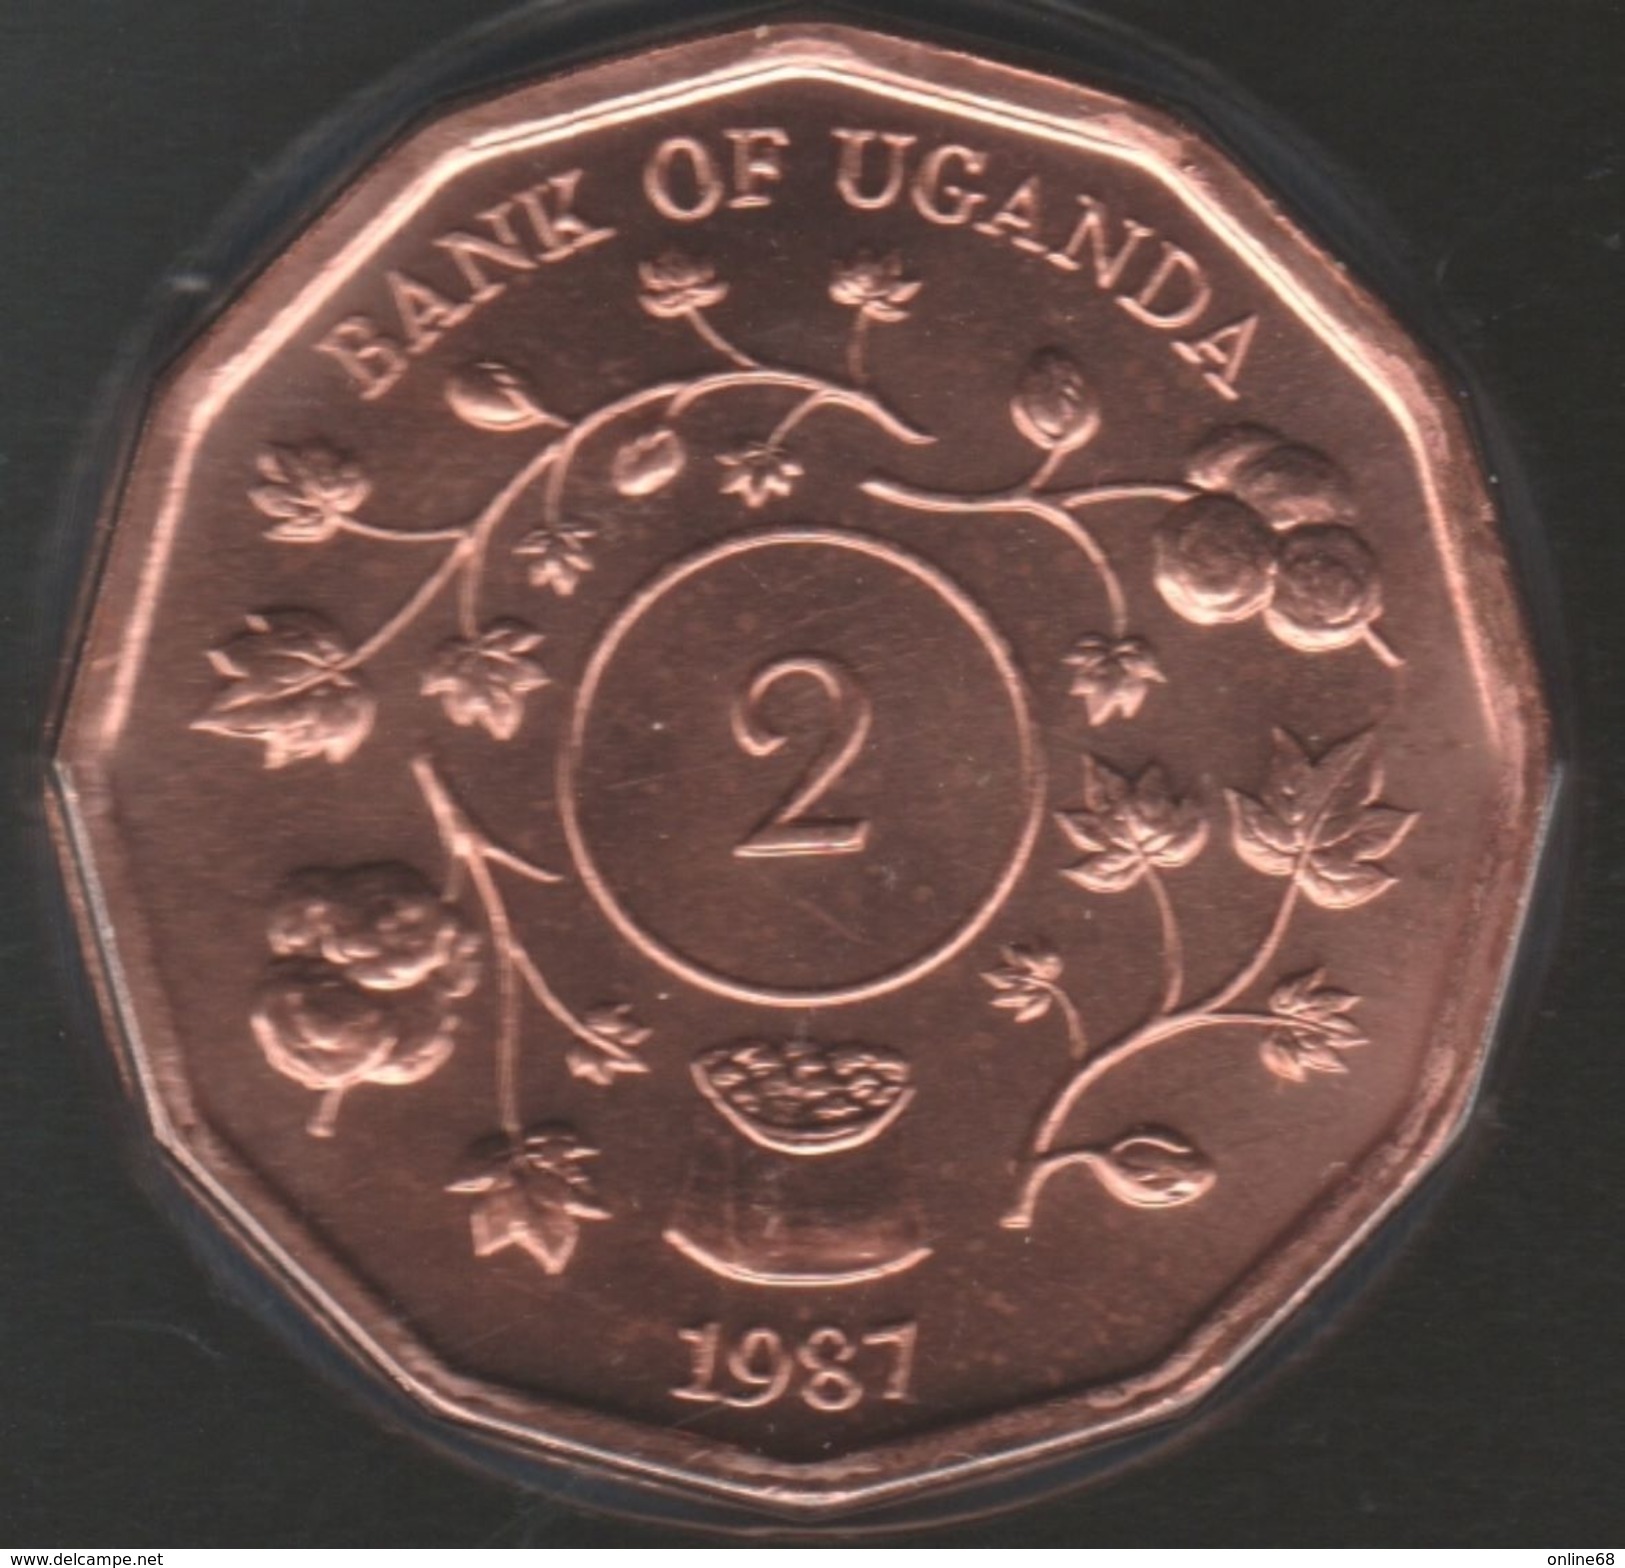 UGANDA 2 SHILLINGS 1987 KM# 28 Dodecagonal 12-sided COIN - Uganda